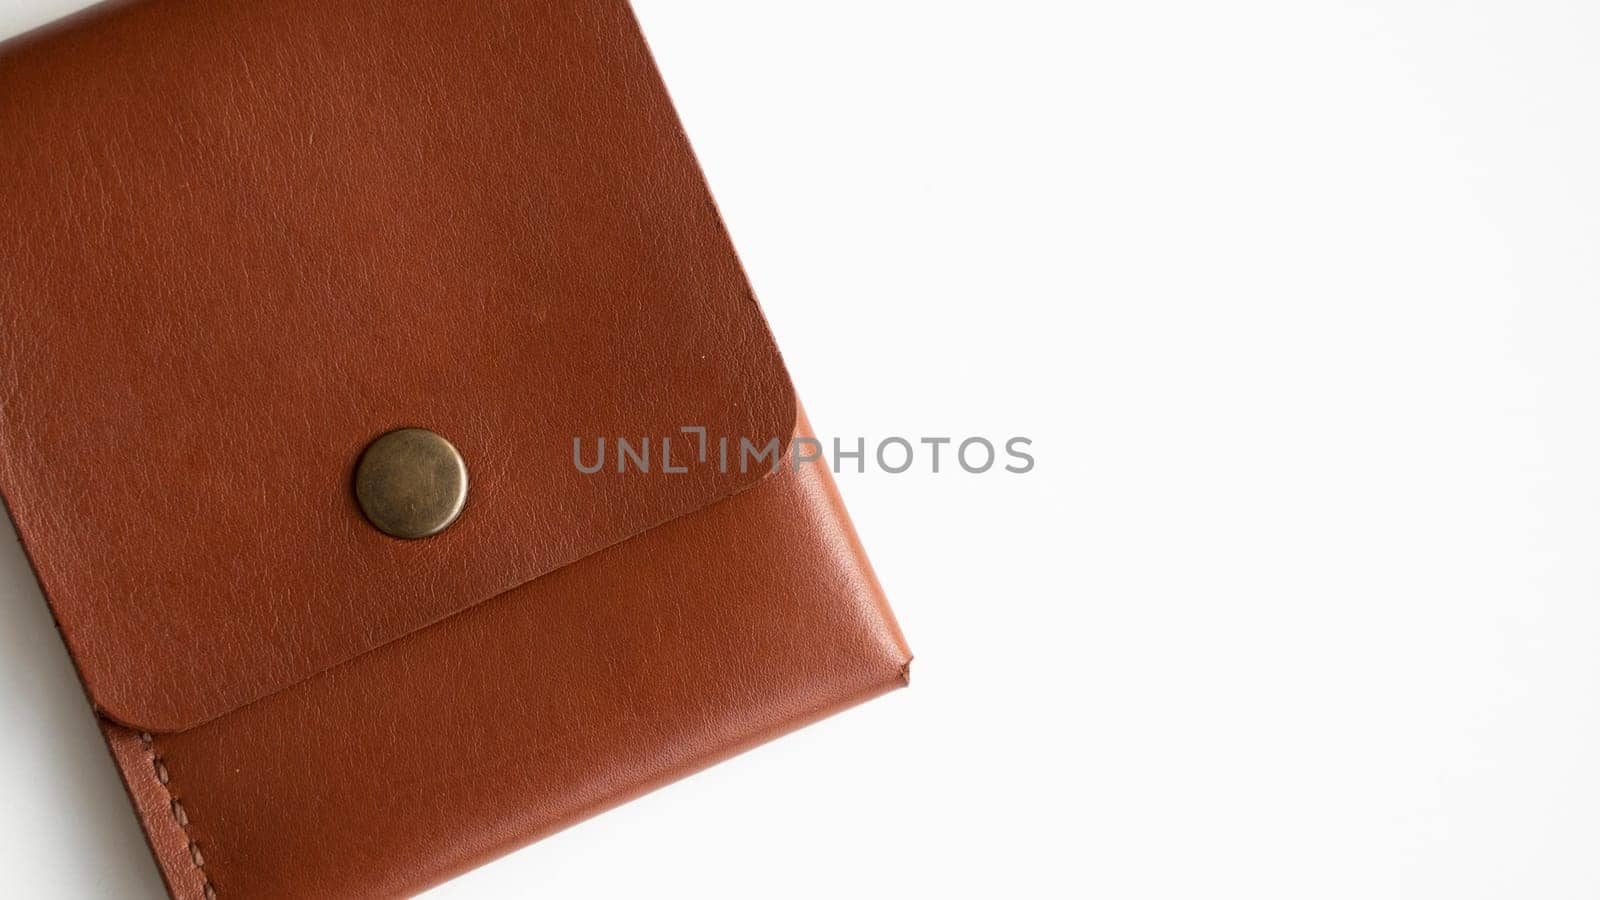 Orange genuine leather card holder on a white surface.